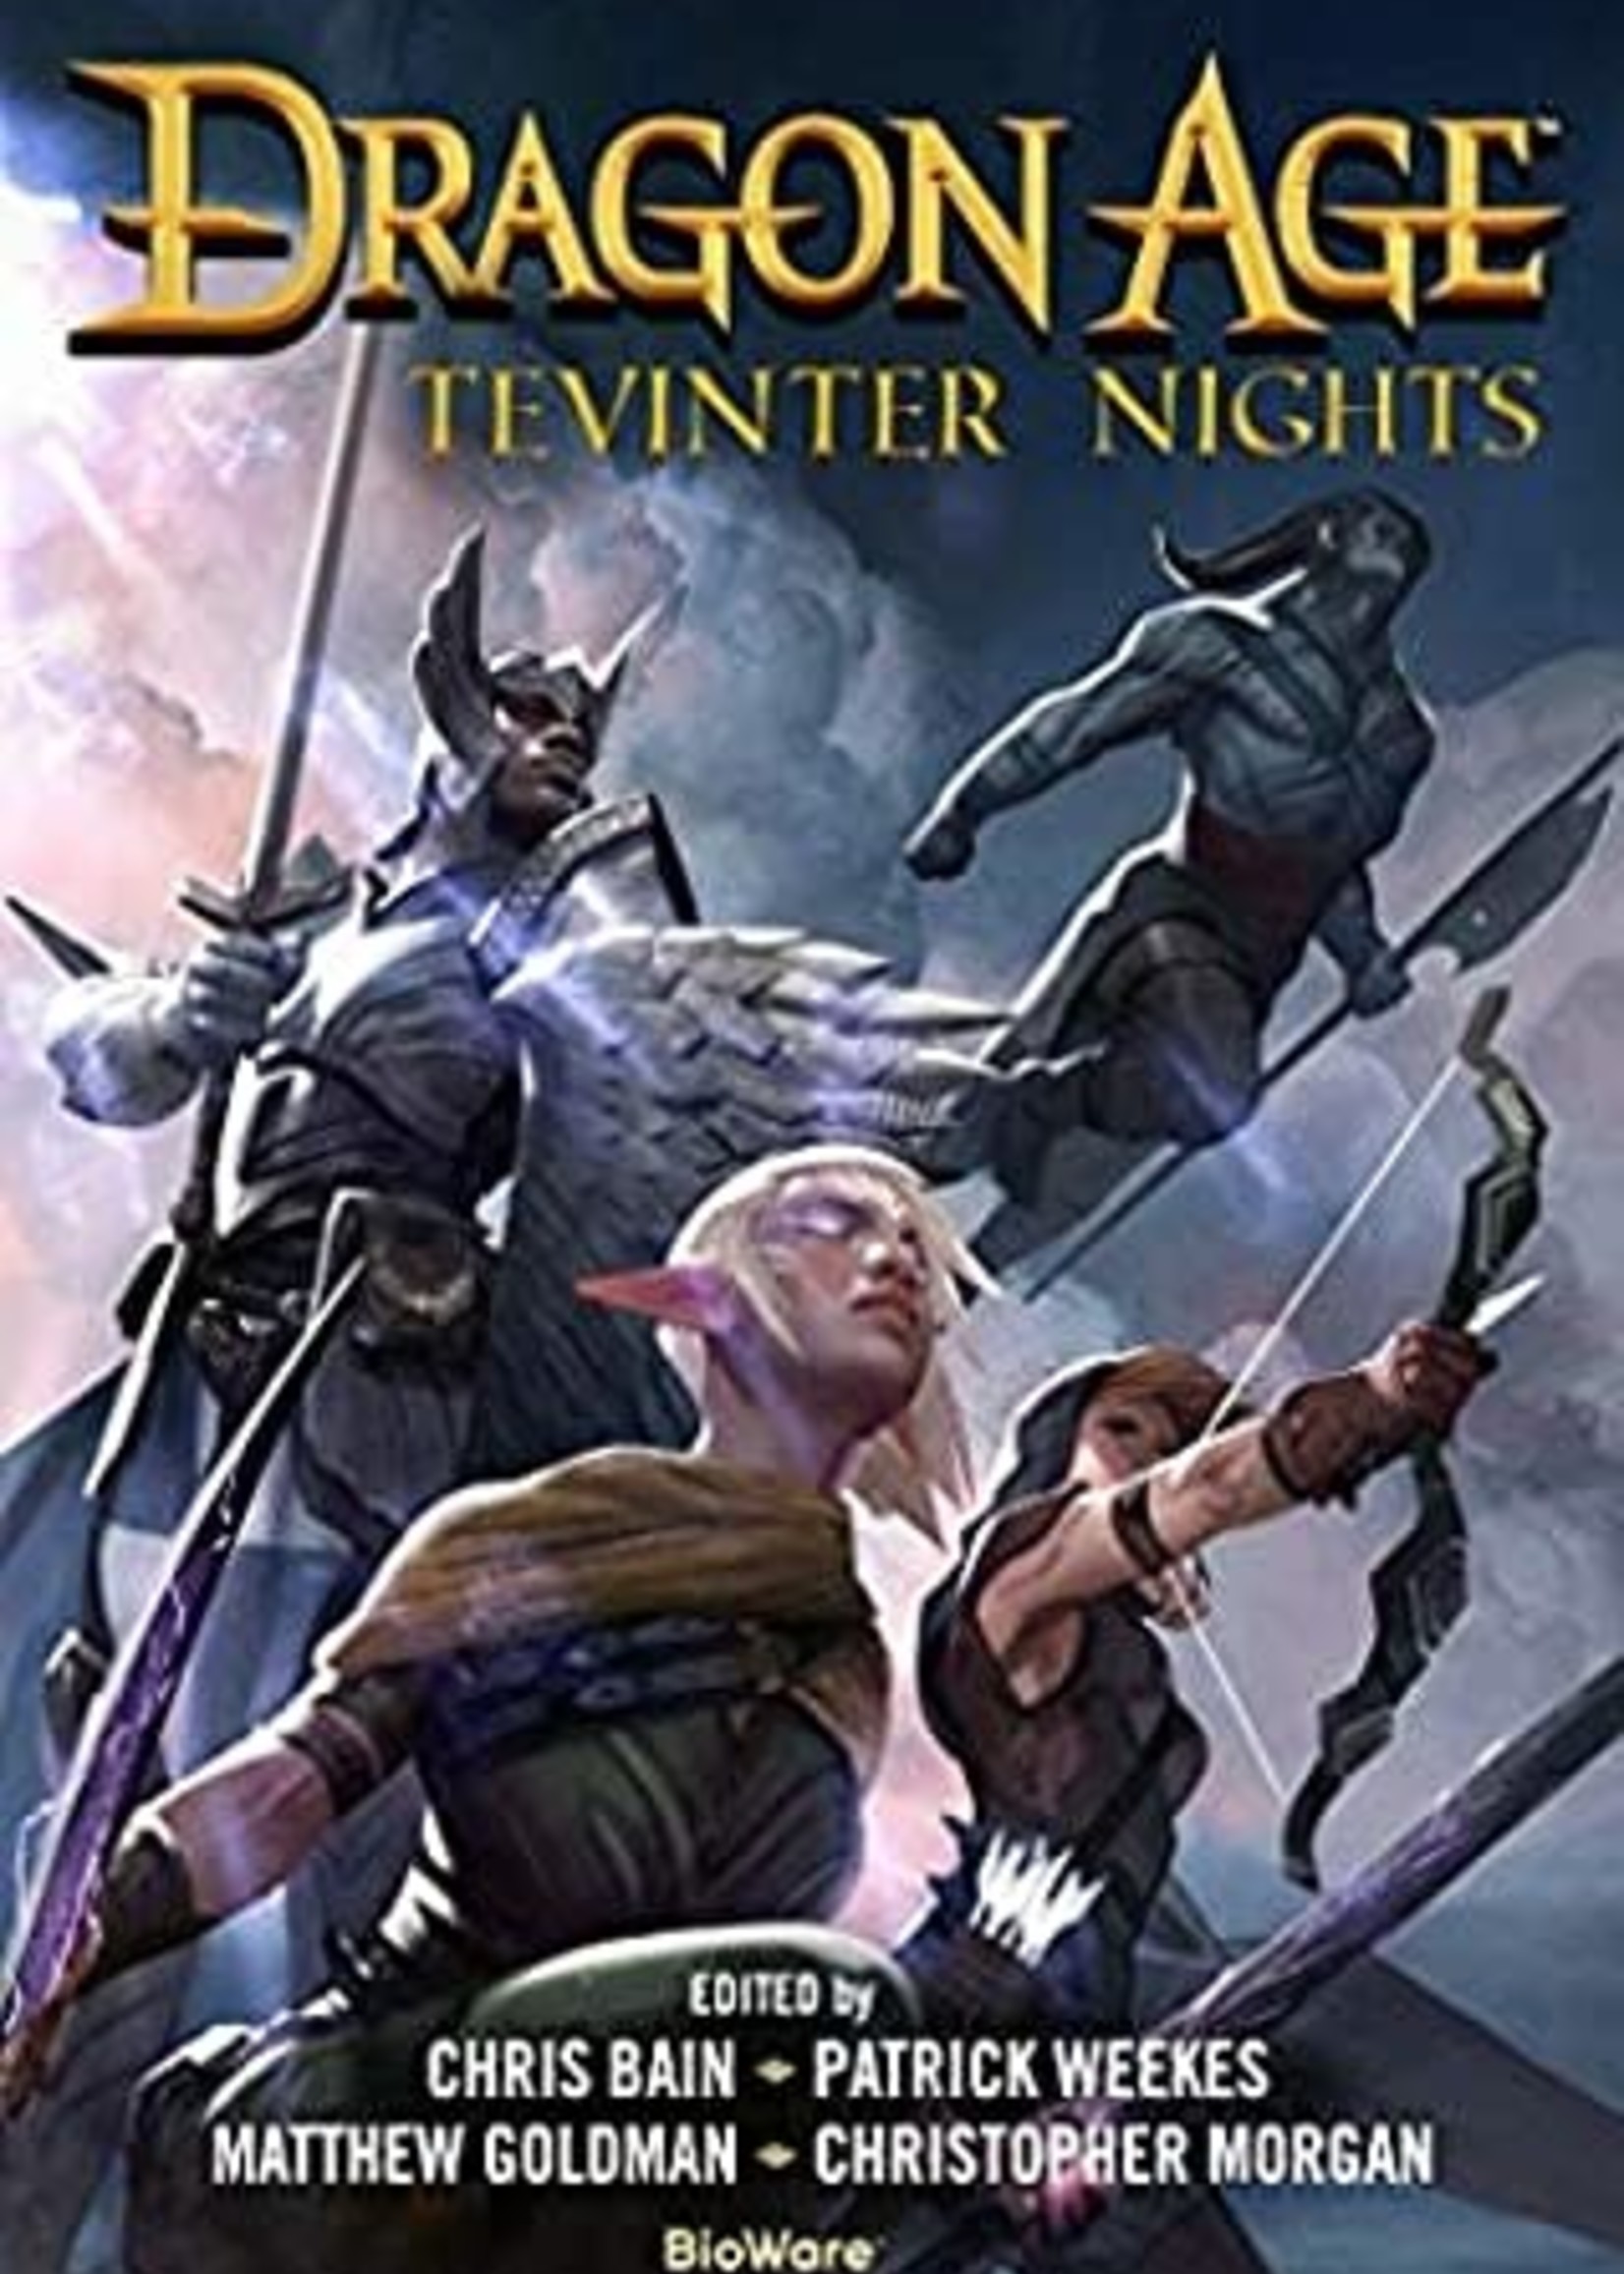 Dragon Age: Tevinter Nights by Chris Bain